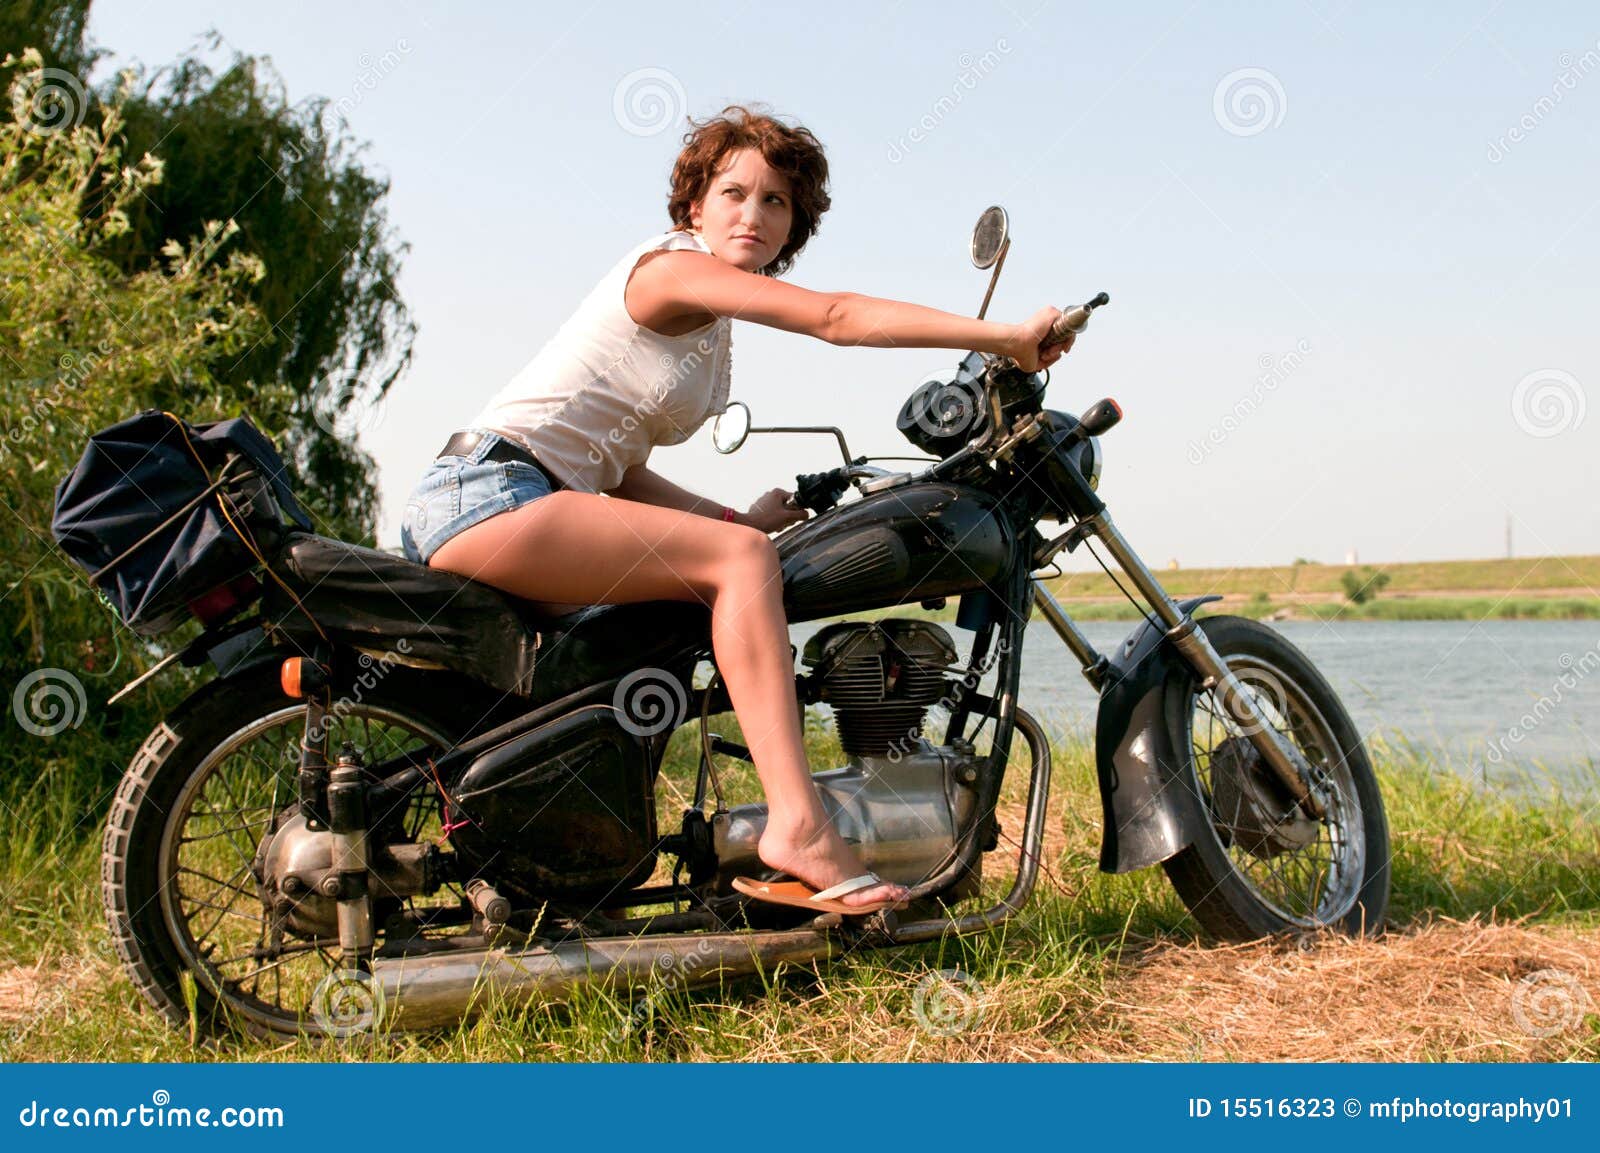 Best of Motorcycle girl pics